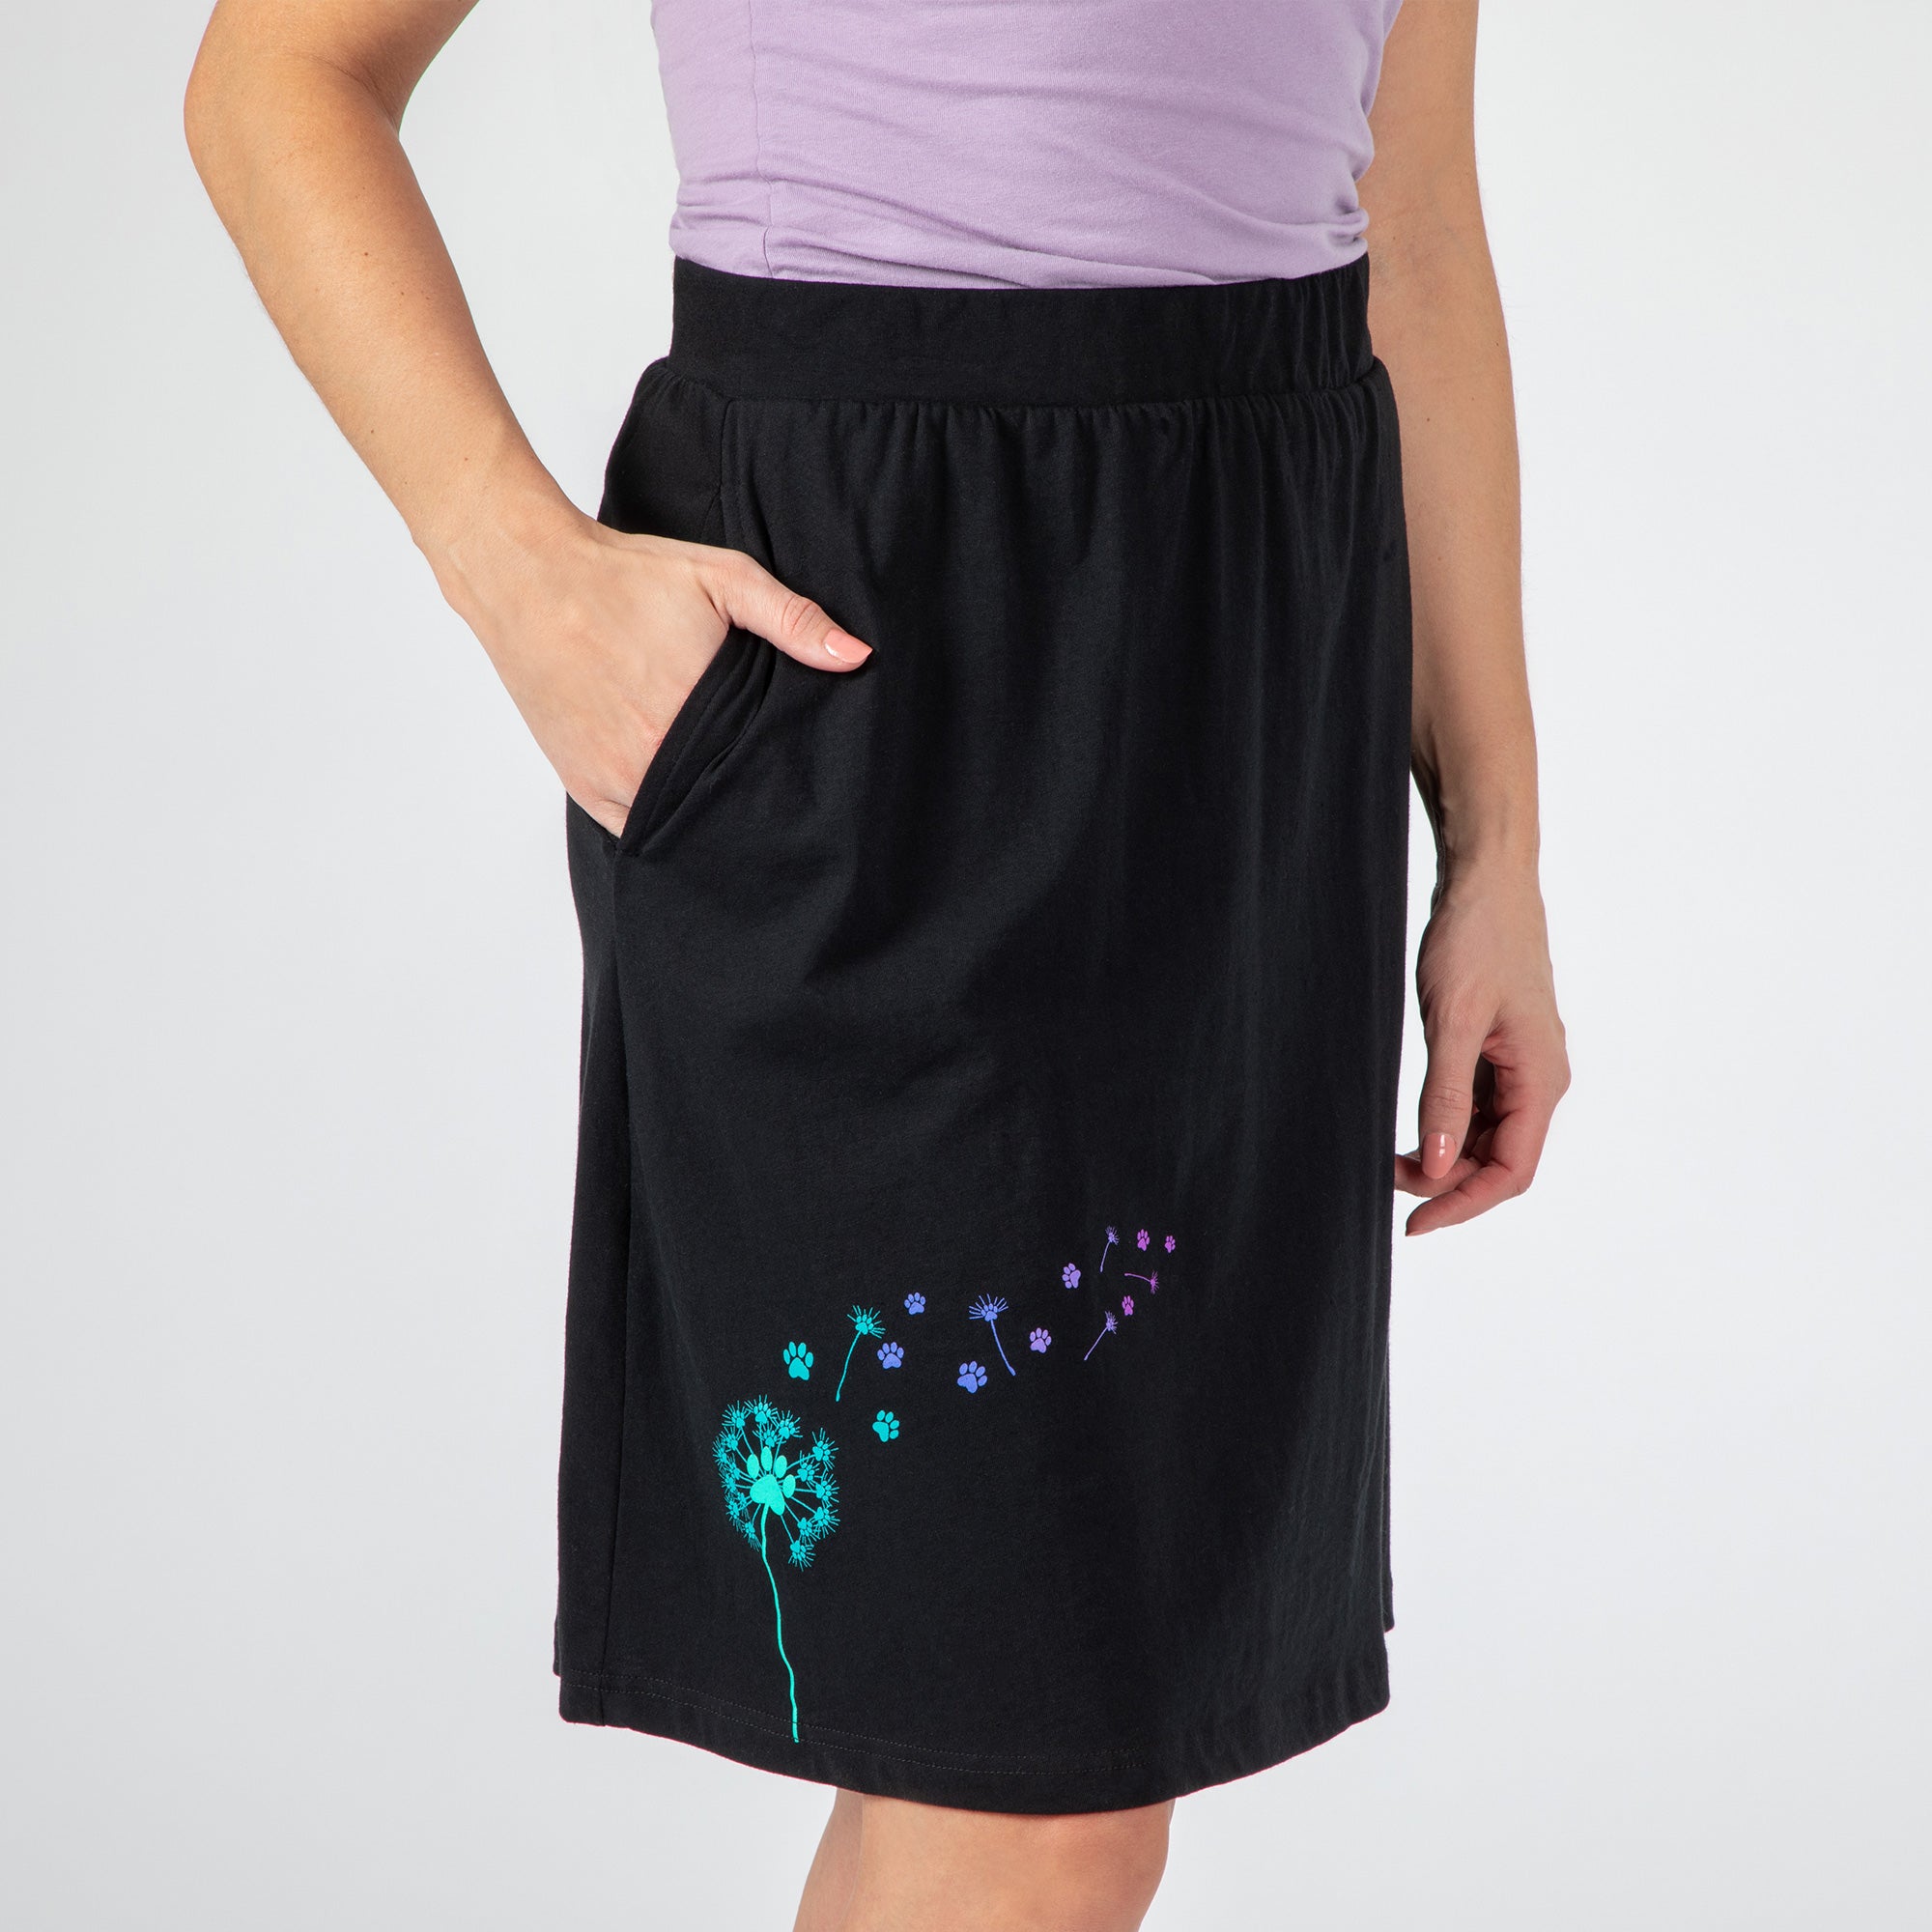 Dandelion Paw Print A-Line Skirt - M